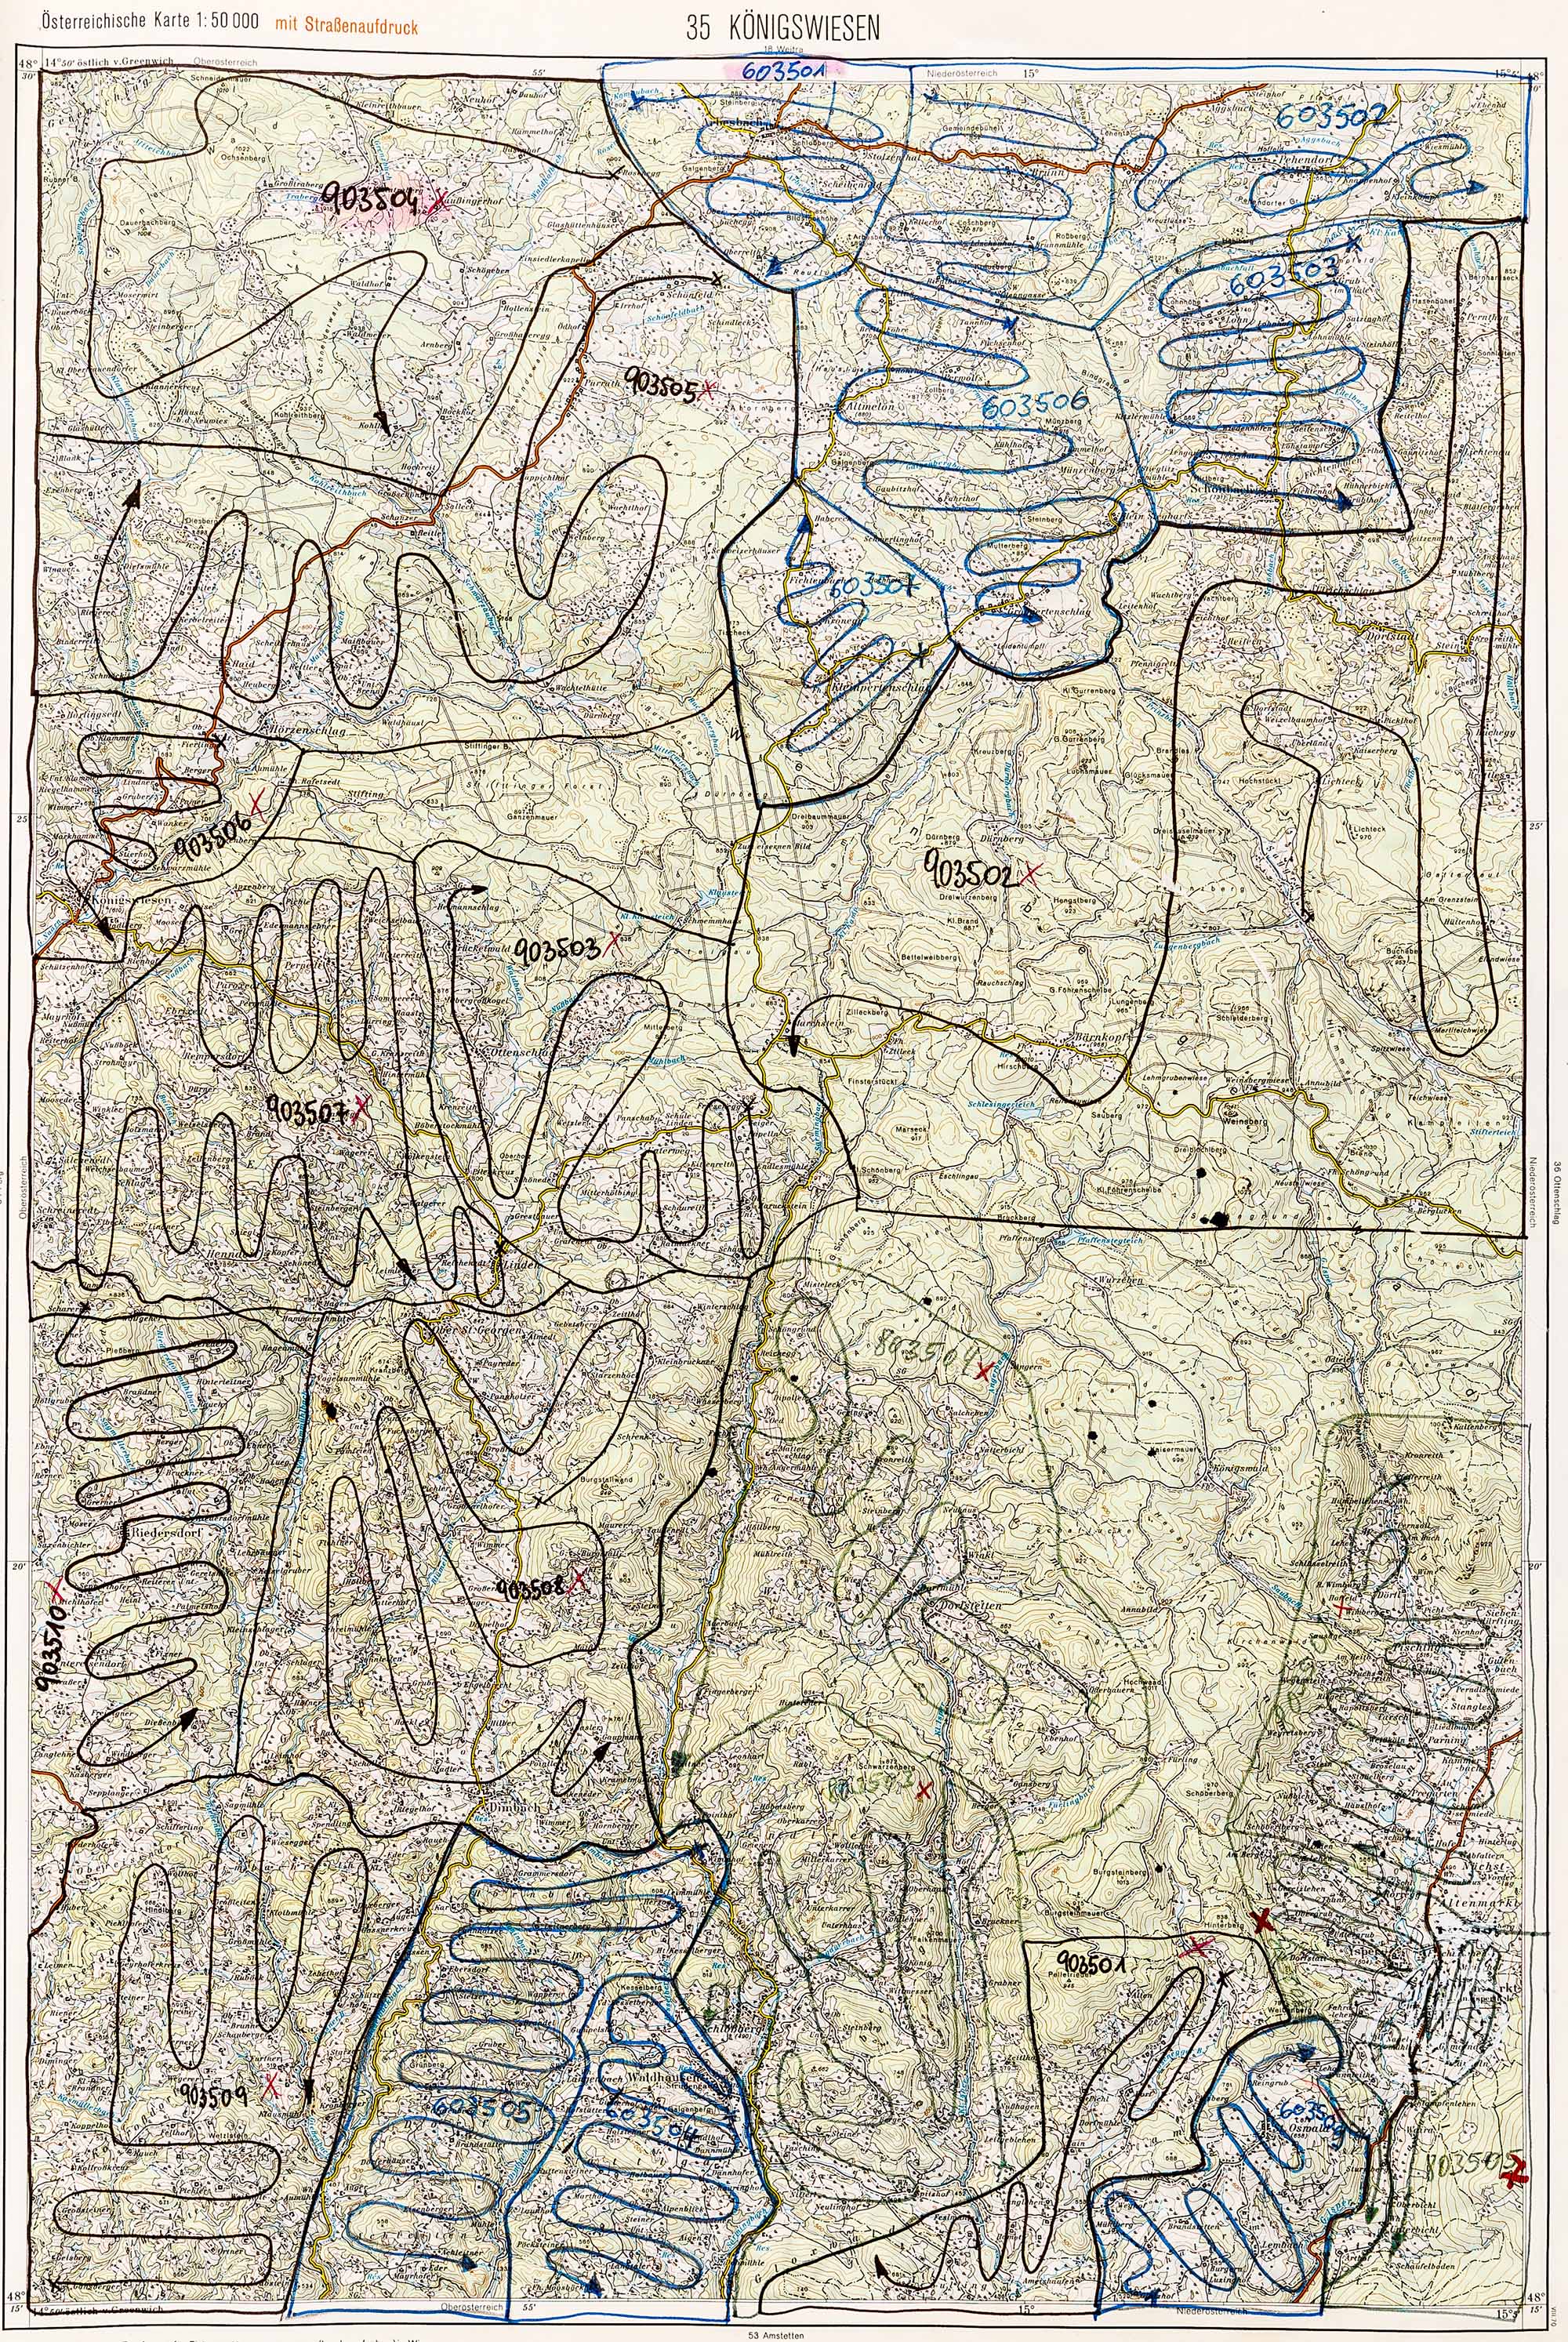 1975-1979 Karte 035